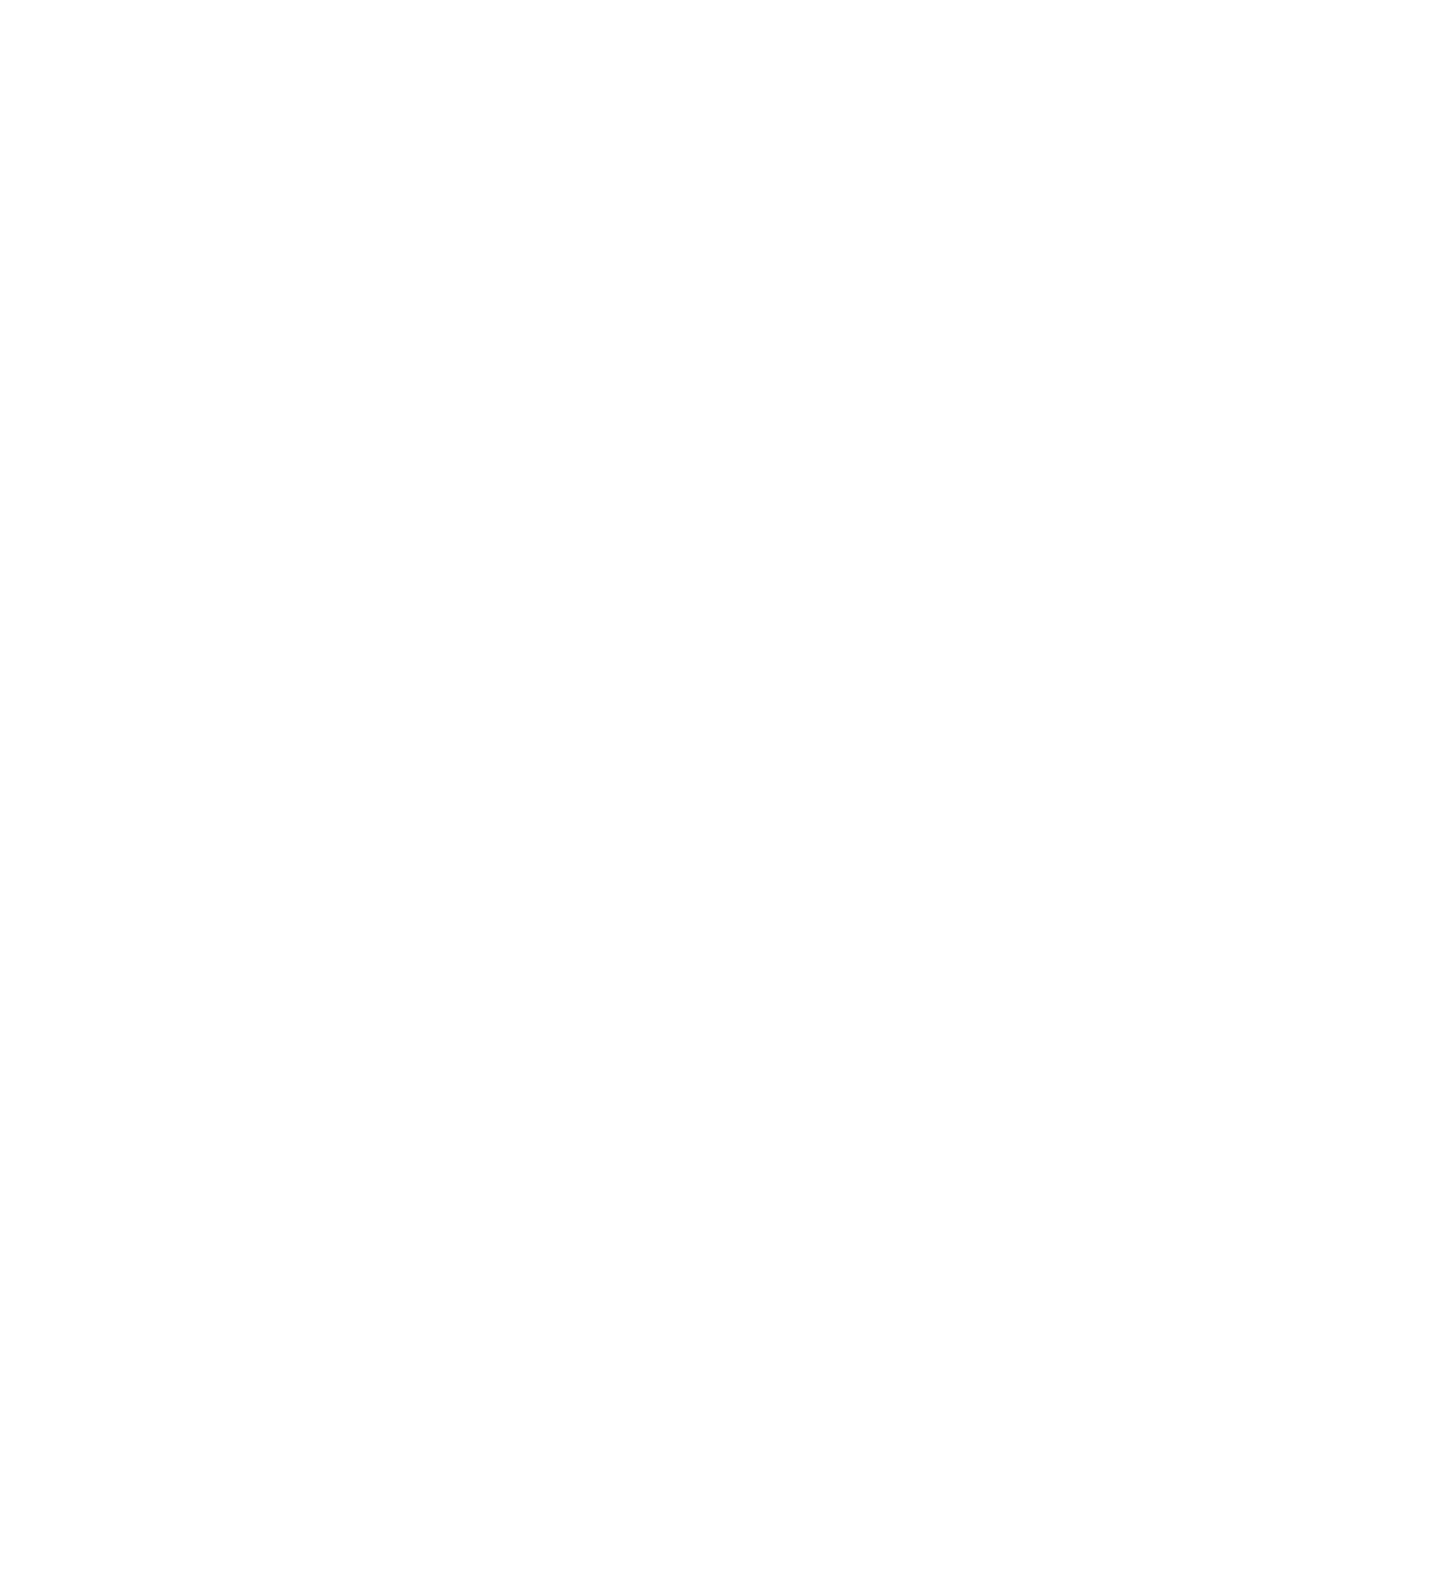 Bank of Communications logo pour fonds sombres (PNG transparent)